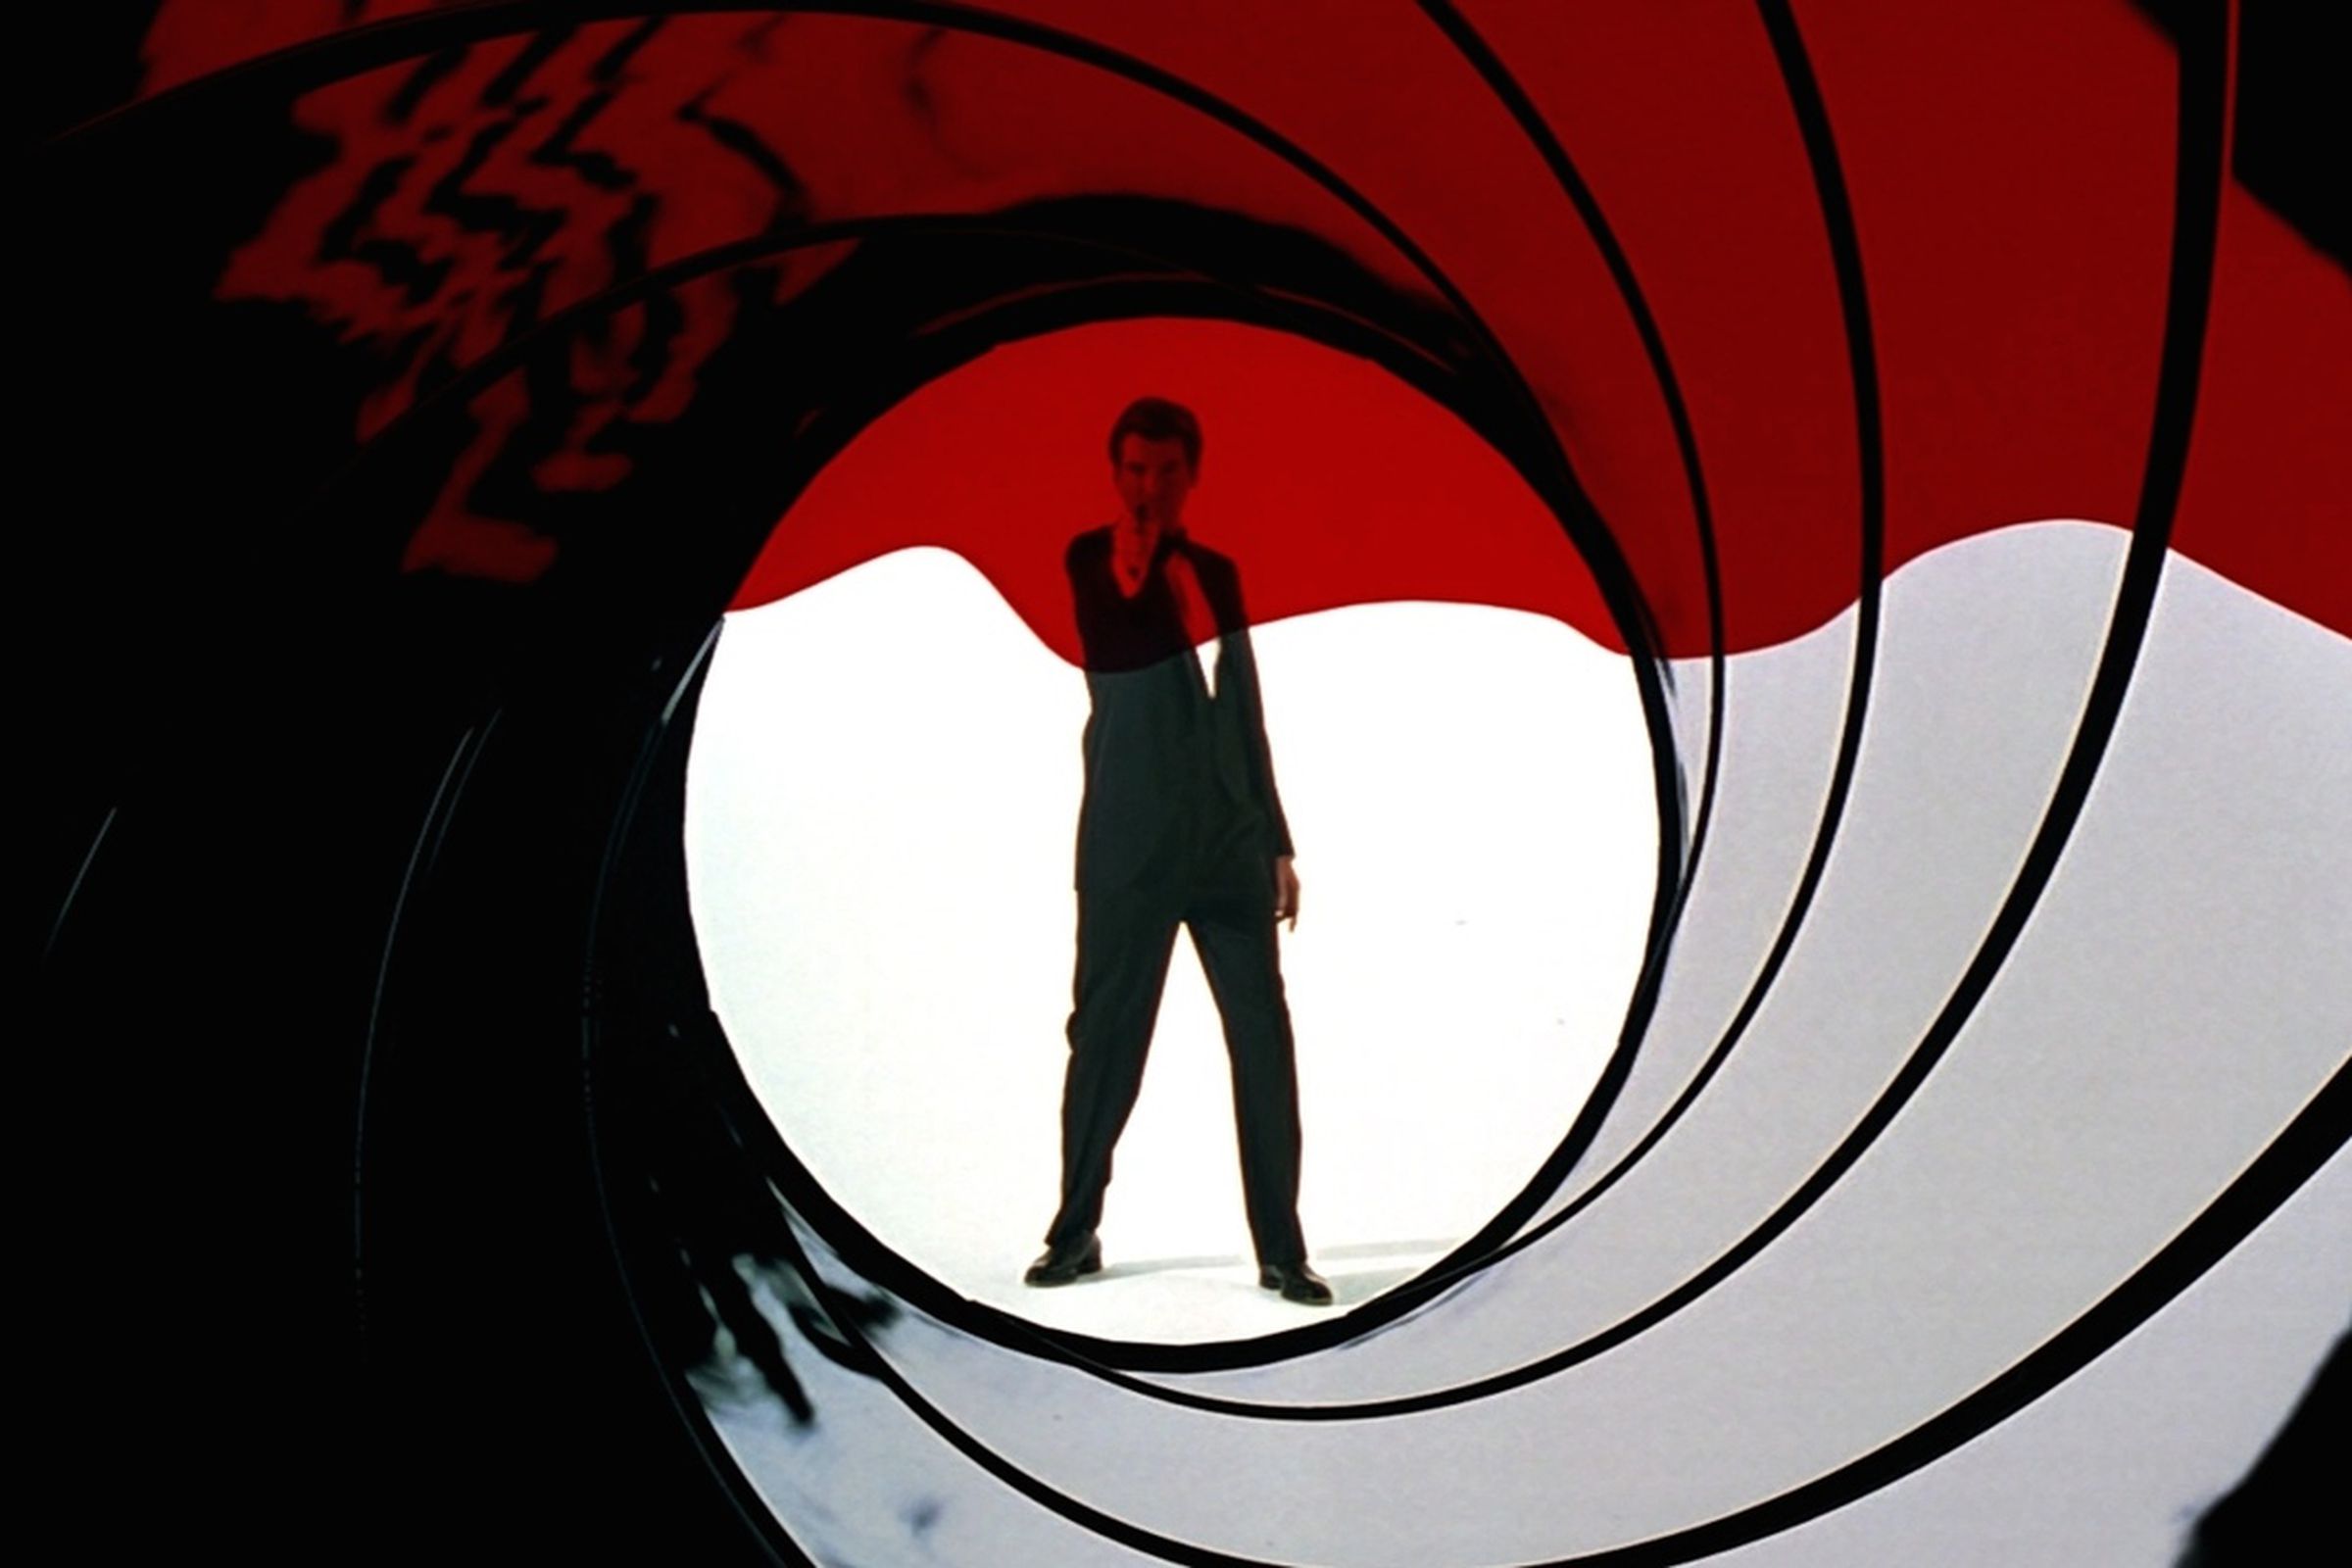 GOLDENEYE James Bond gun barrel opening